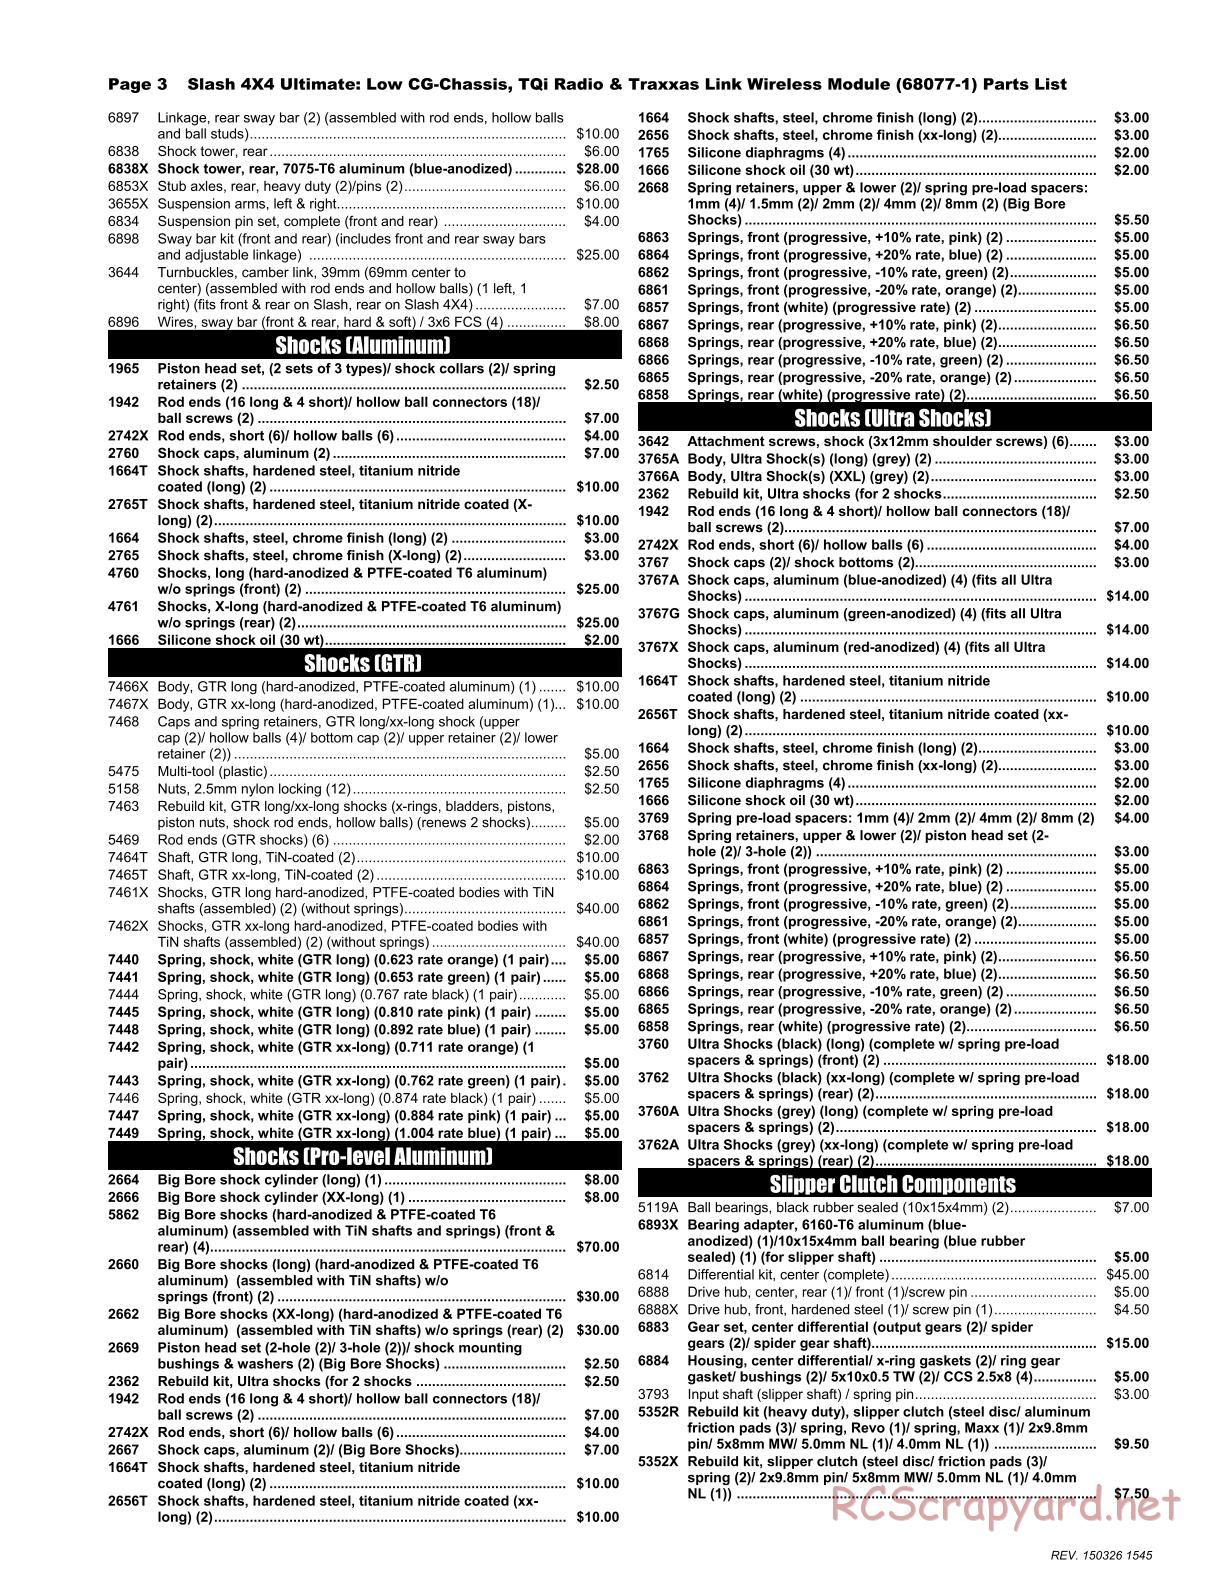 Traxxas - Slash 4x4 Ultimate (2015) - Parts List - Page 3